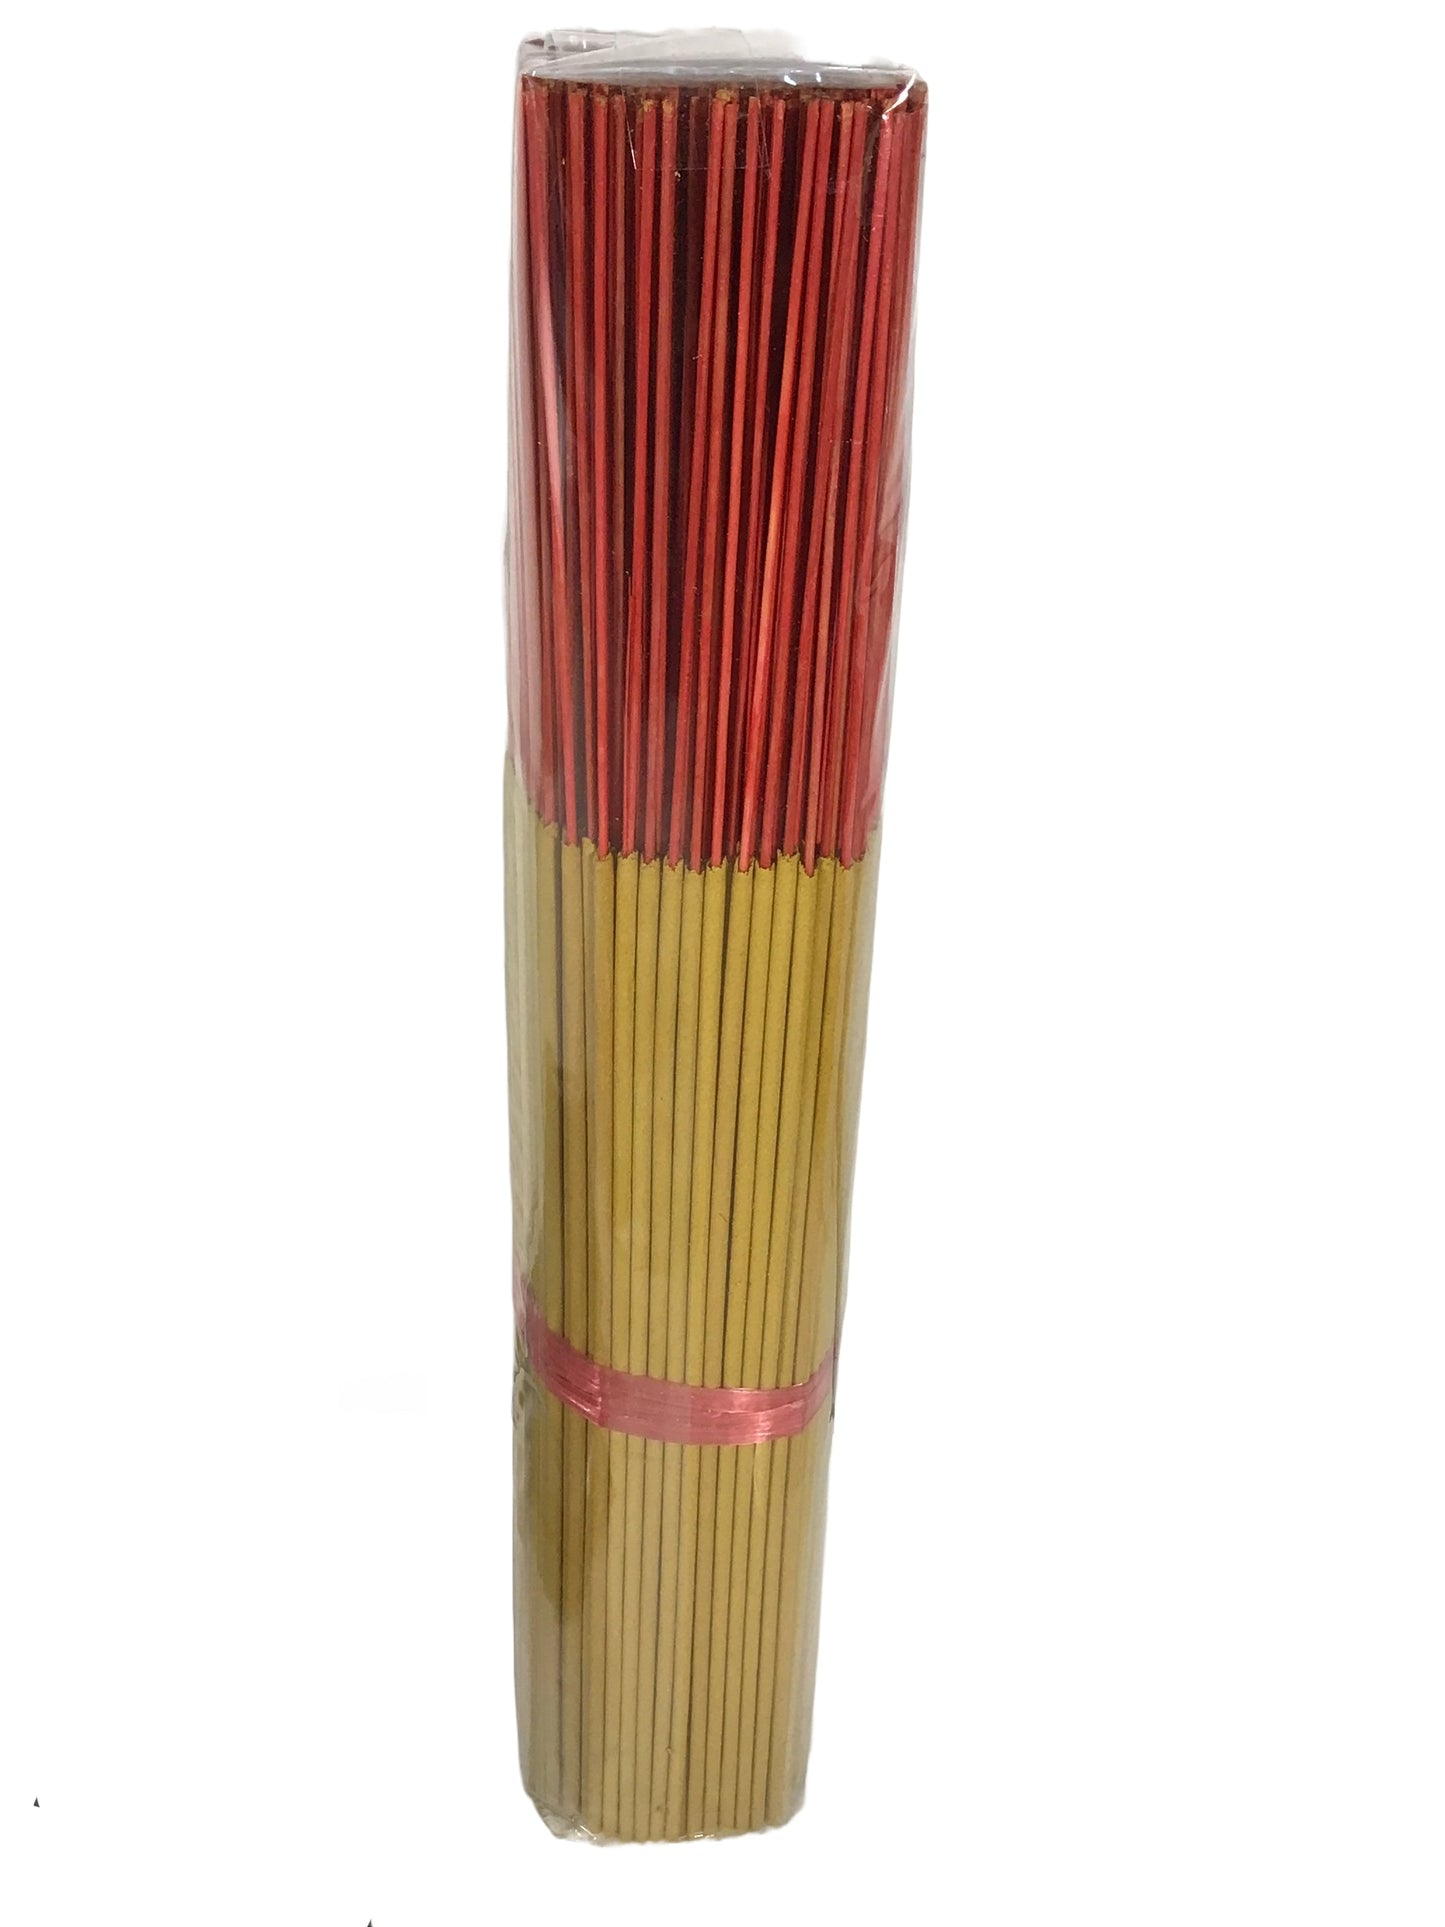 25cm Long Incense Sticks for the Buddha - About 400 Sticks 万里行 佛祖荷花香